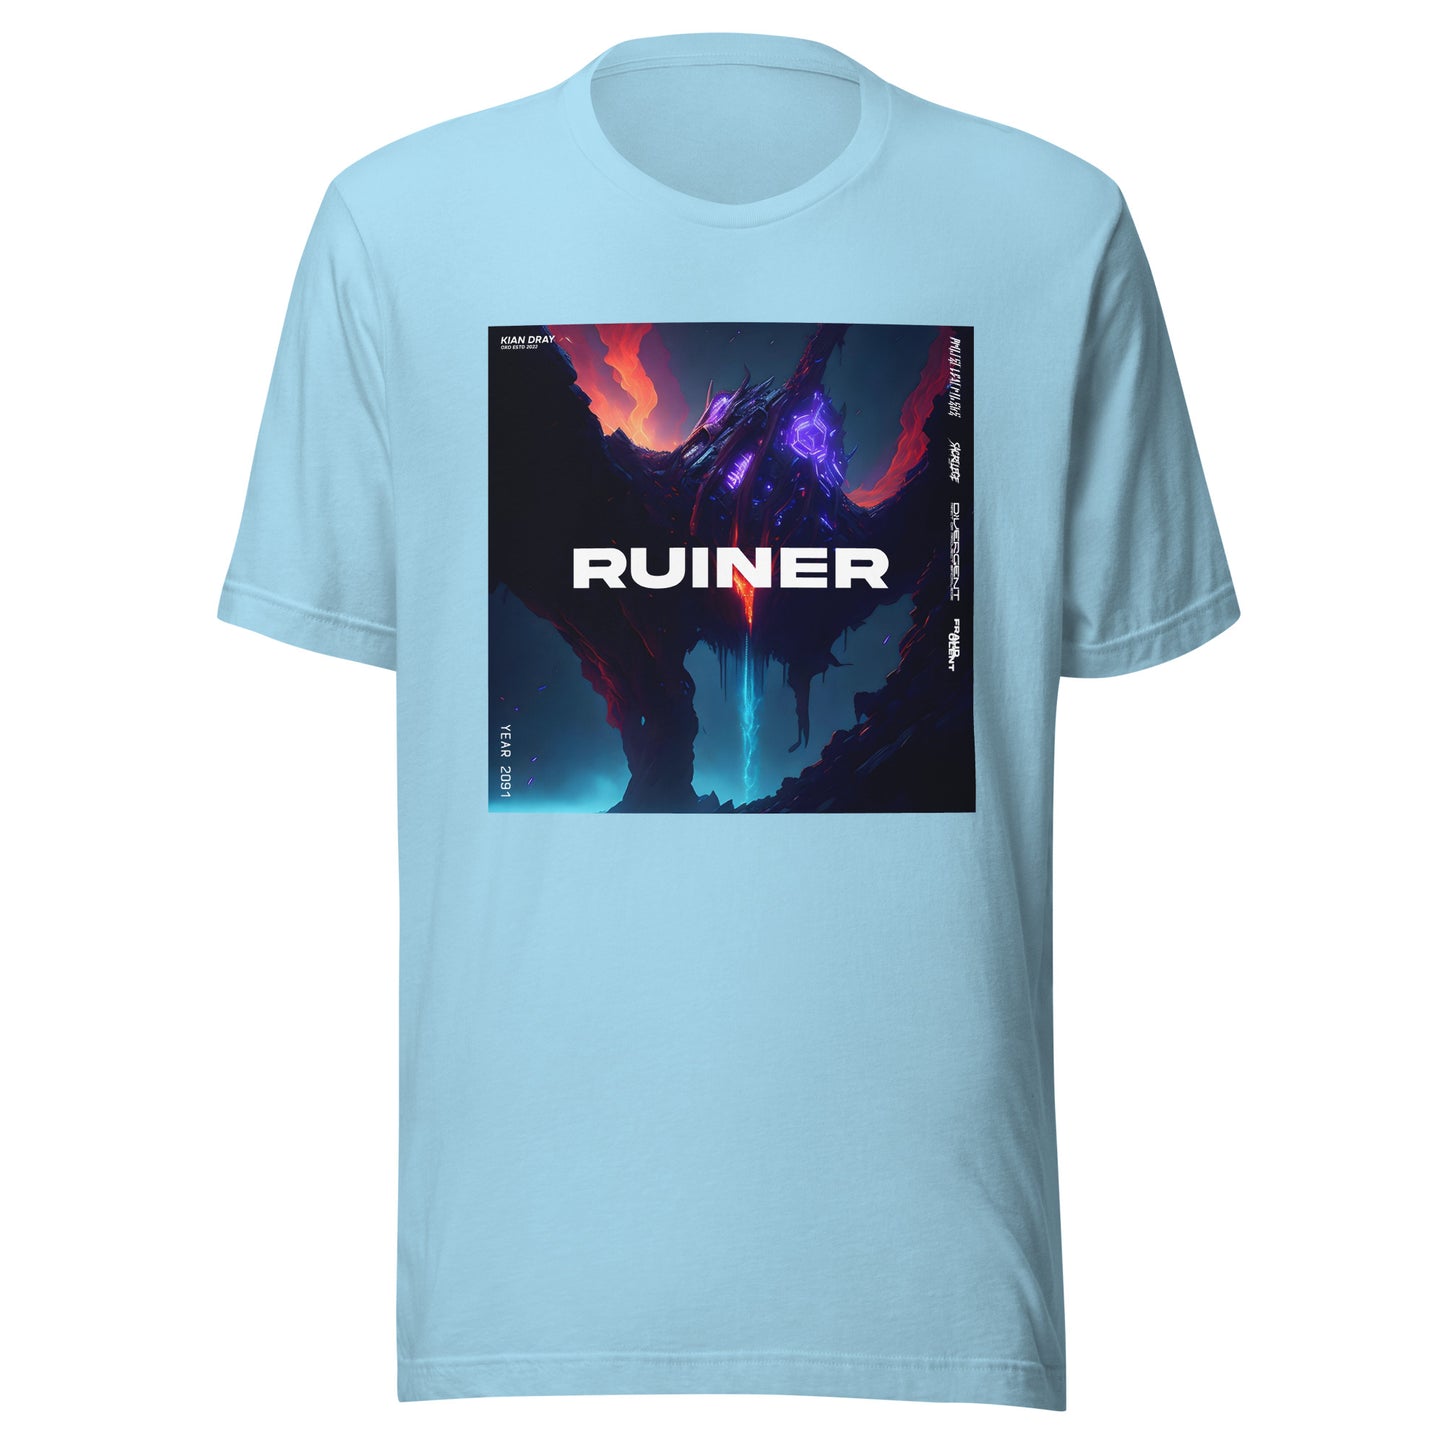 Kian Dray - Ruiner T-Shirt